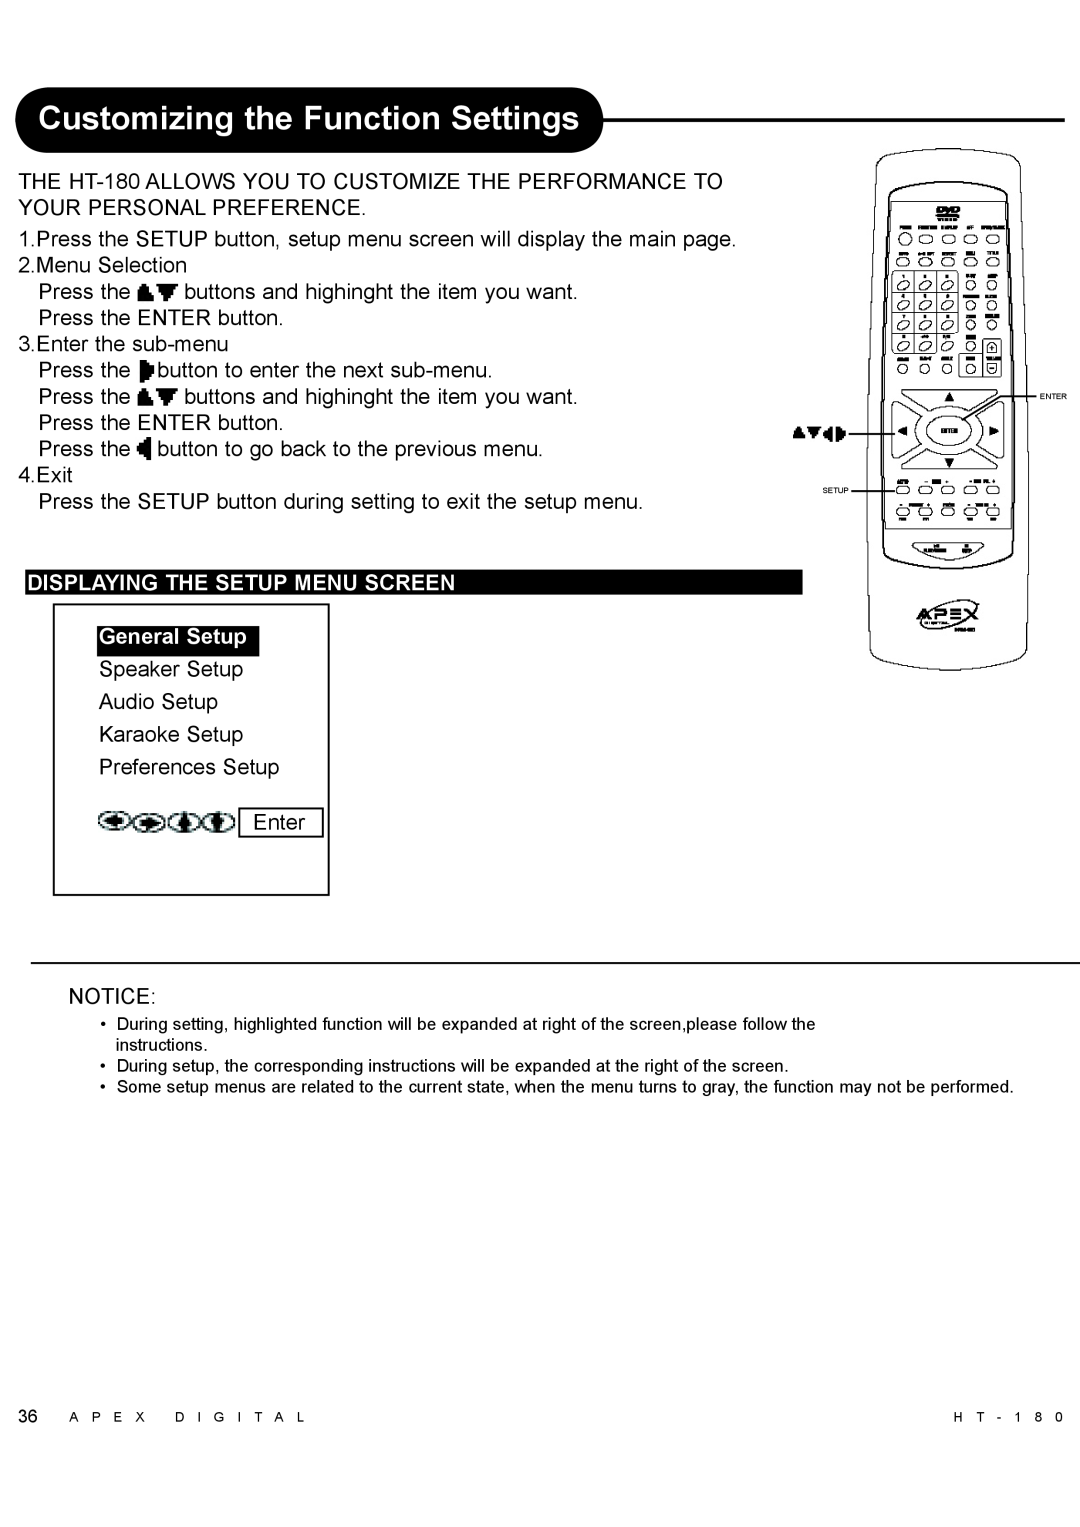 Apex Digital HT-180 manual Customizing the Function Settings, DISPLAYING THE SETUP MENU SCREEN General Setup 